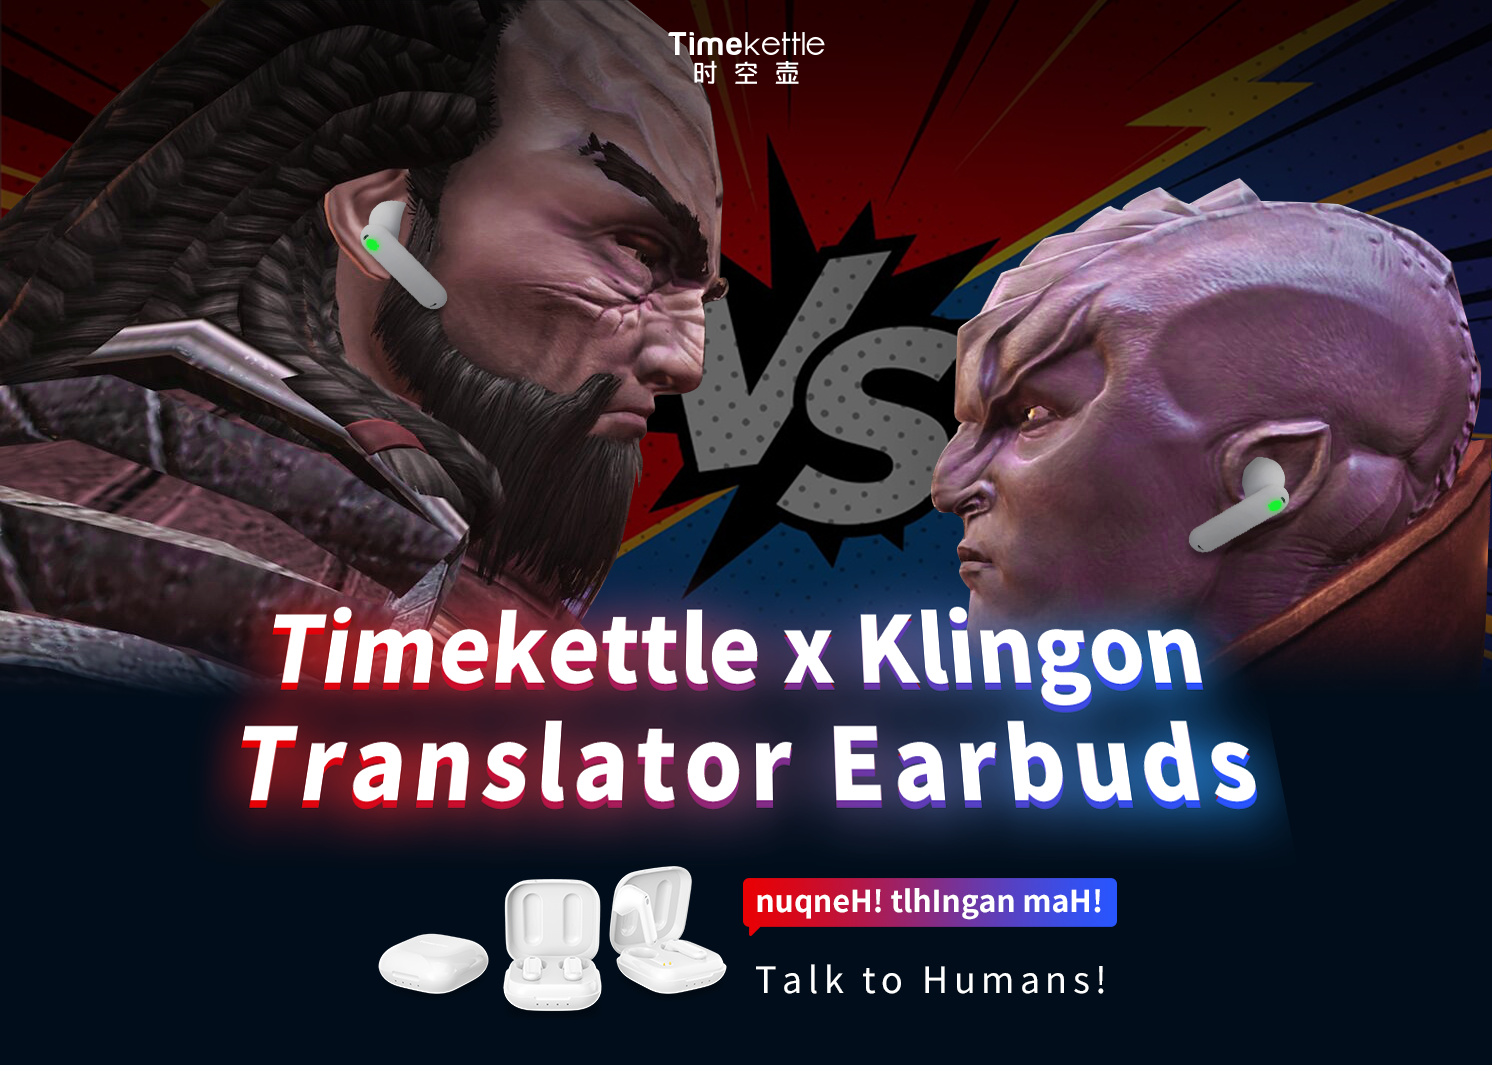 Timekettle New Cross-Species Translator Supports Klingon and Dog&Cat Translation